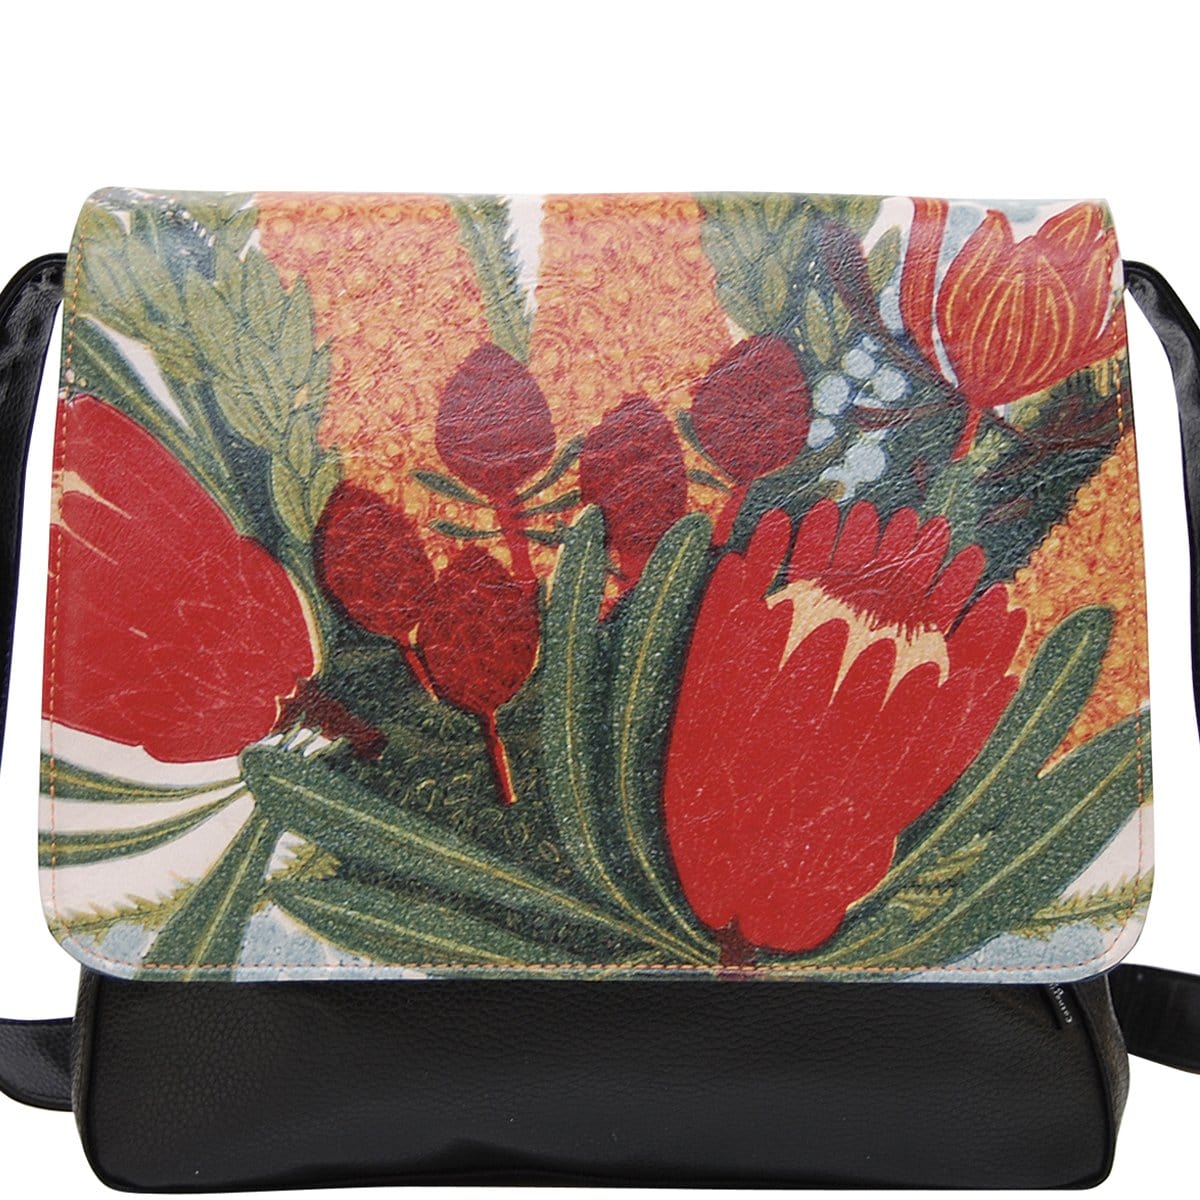 Floral Satchel Bag - Native Posy